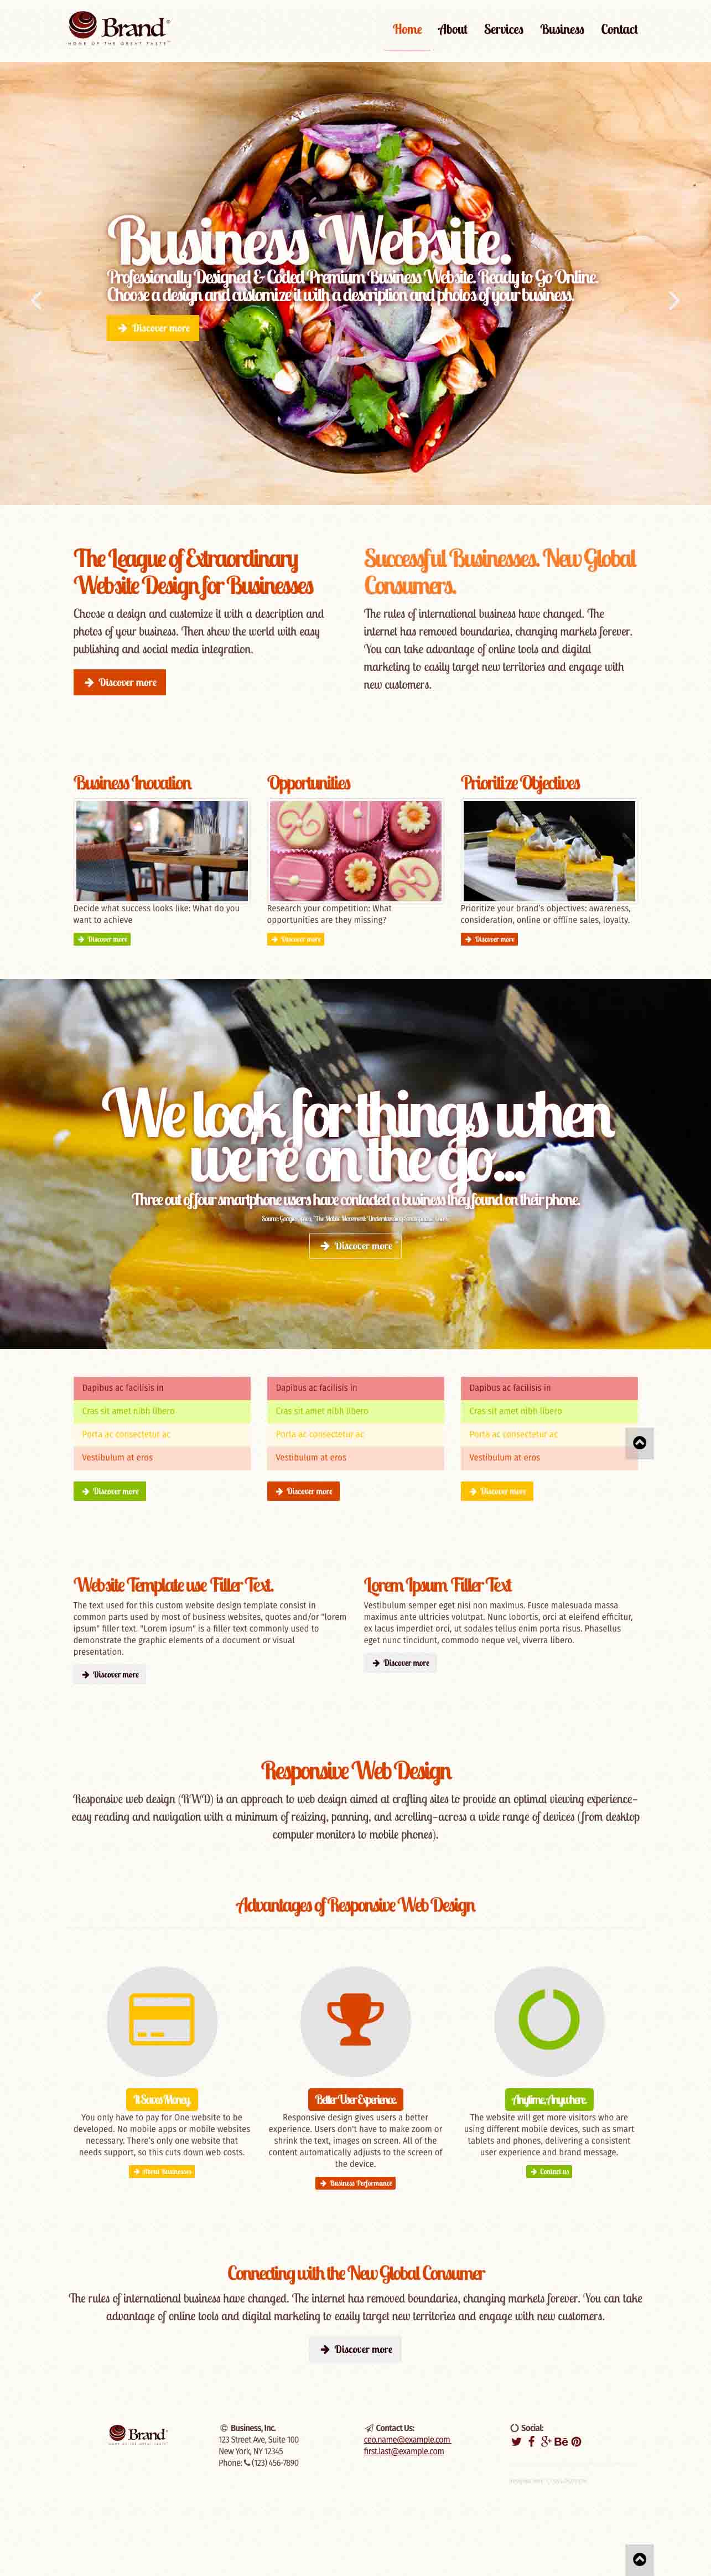 Responsive Web Design Flavorat